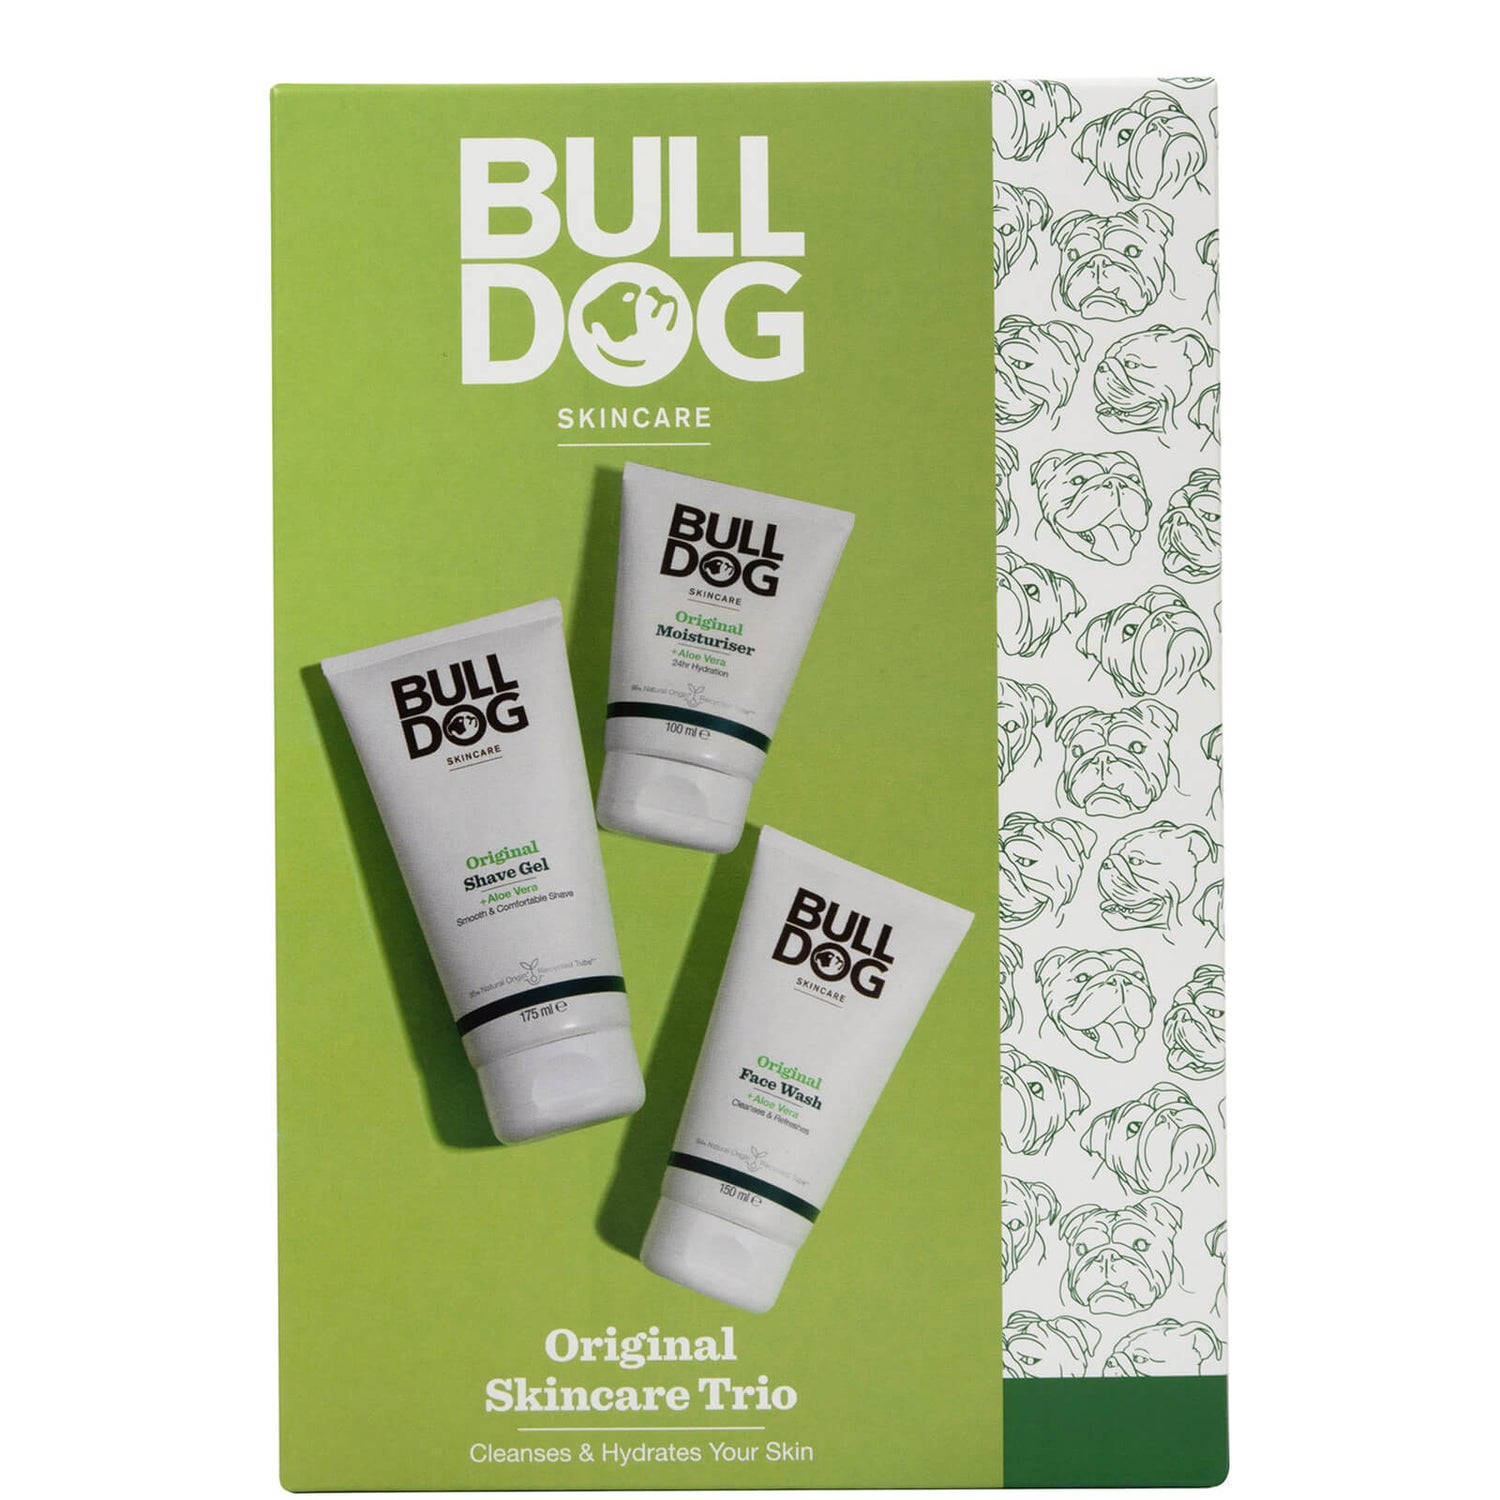 Bulldog Skincare for Men Original Trio Set (Worth £15.35)